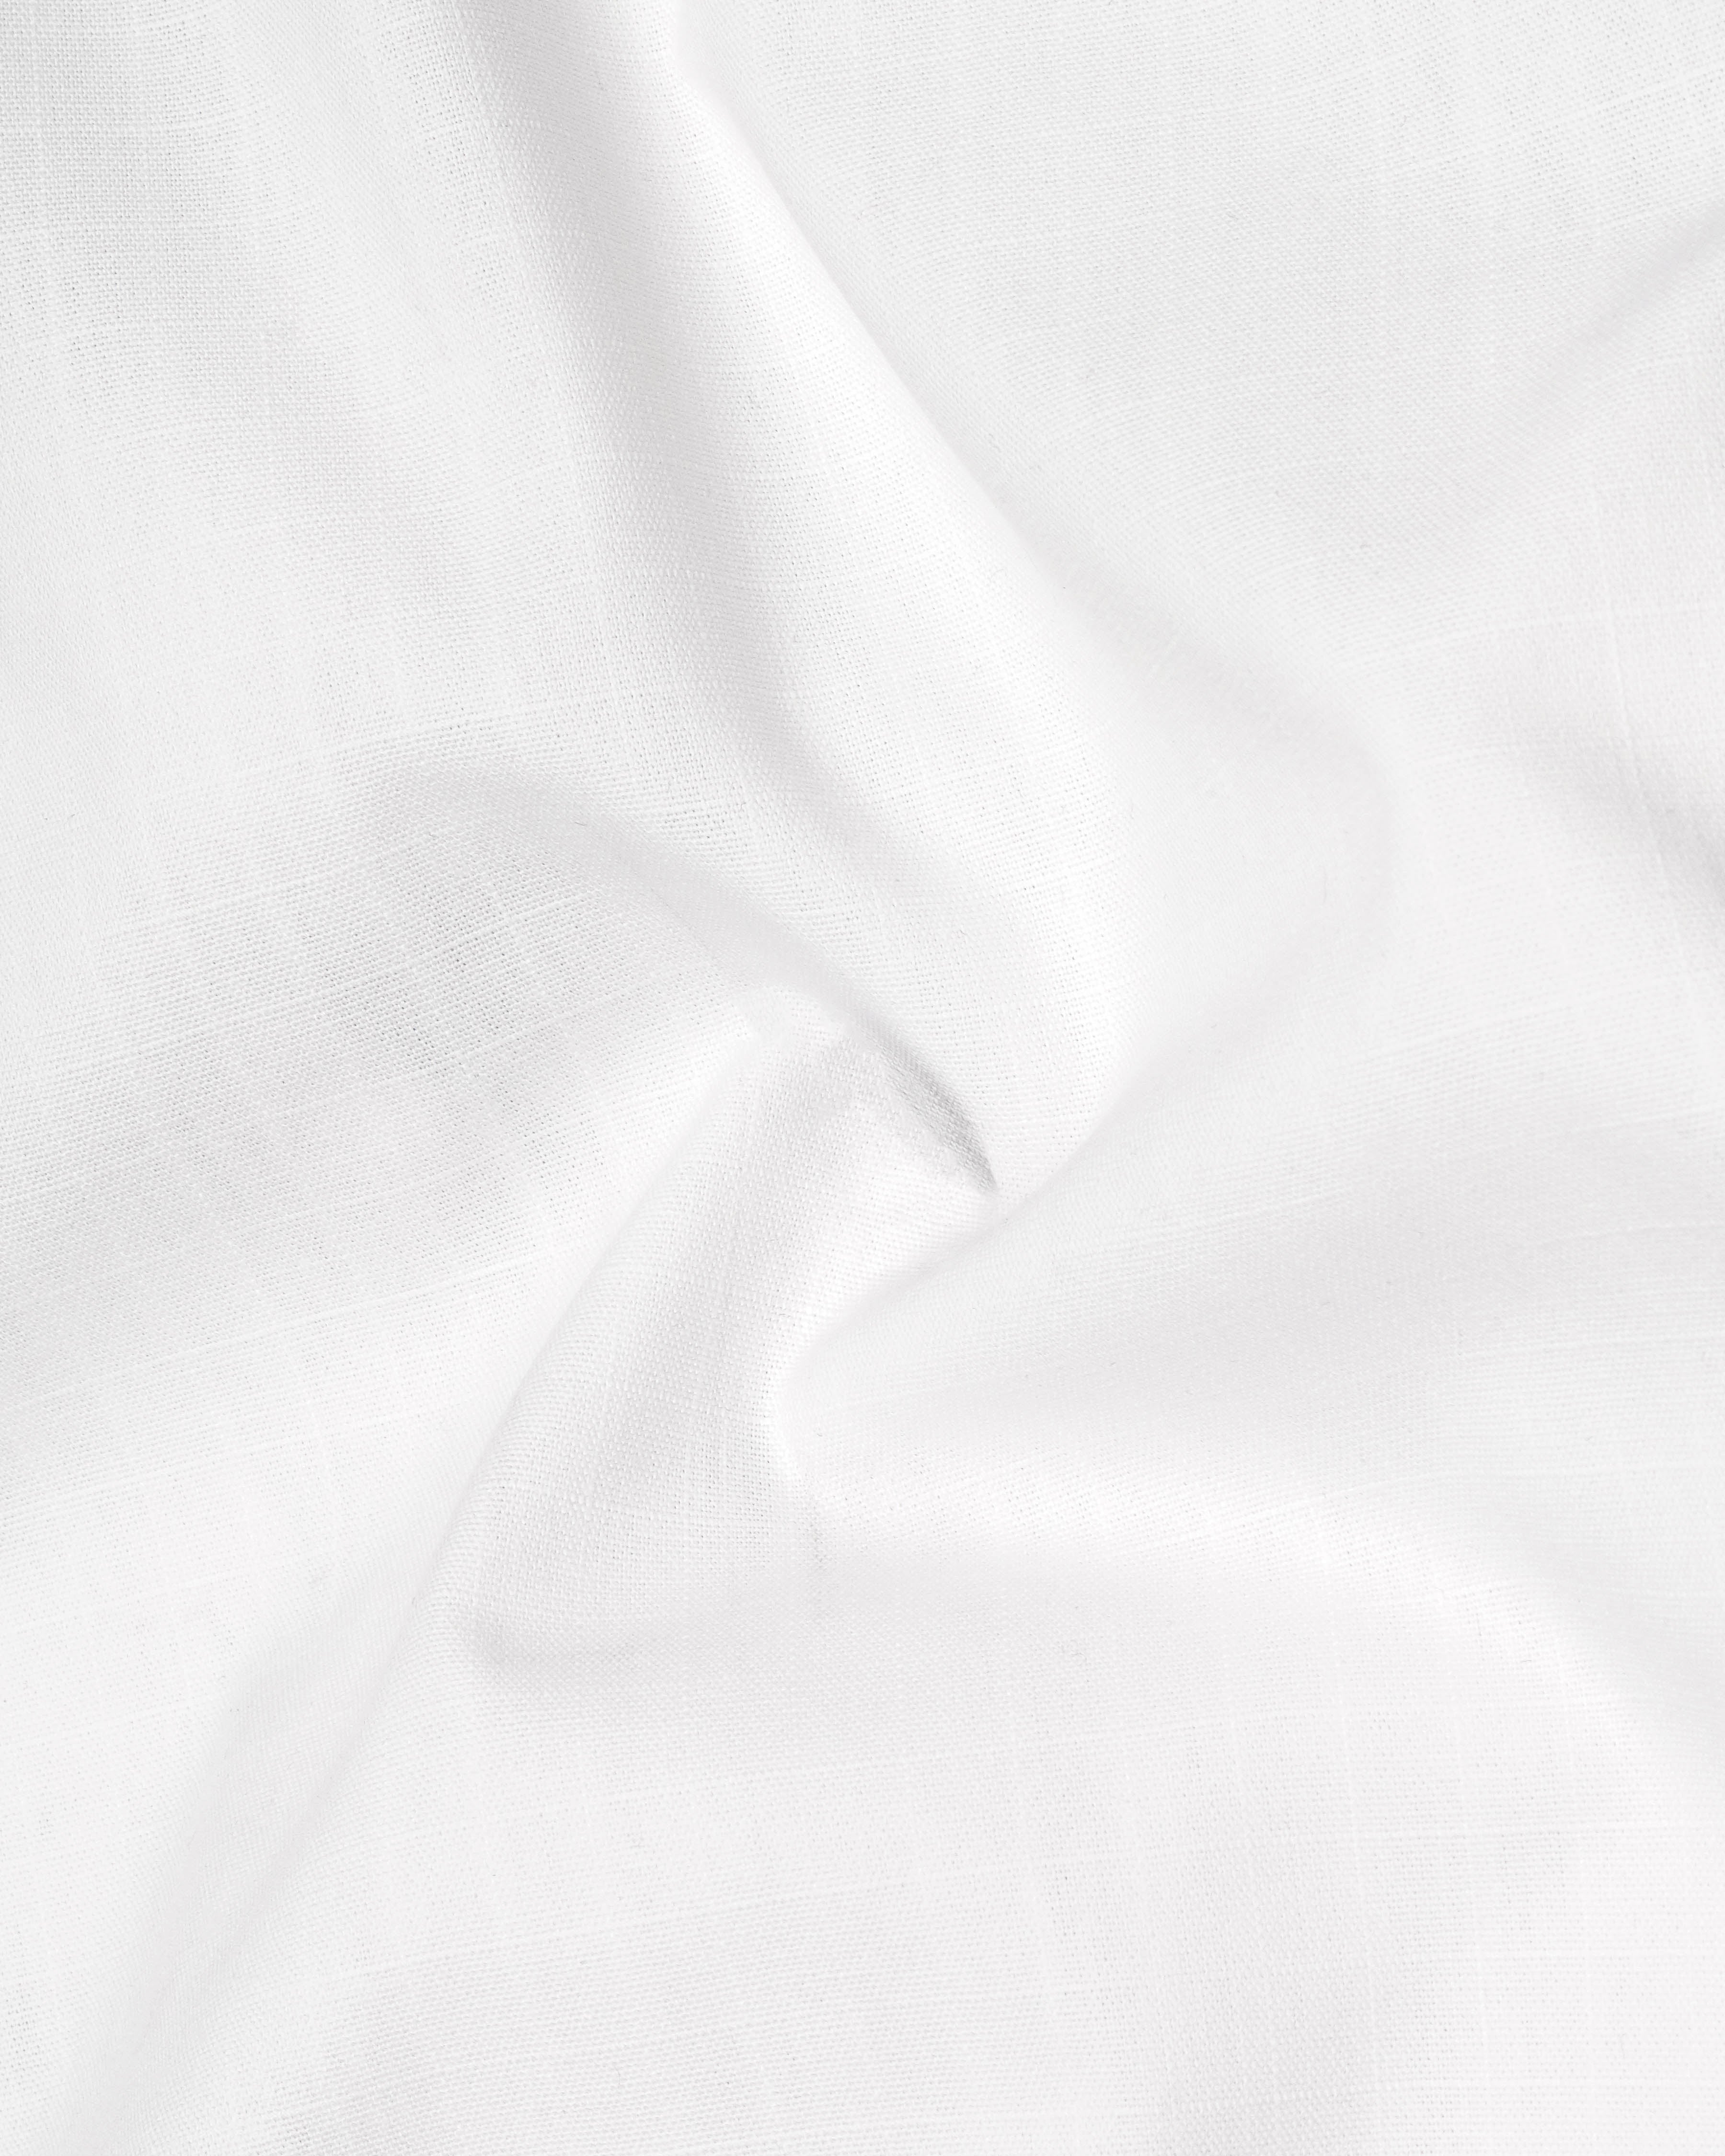 Bright White Premium Cotton Designer Waistcoat V2065-36, V2065-38, V2065-40, V2065-42, V2065-44, V2065-46, V2065-48, V2065-50, V2065-52, V2065-54, V2065-56, V2065-58, V2065-60